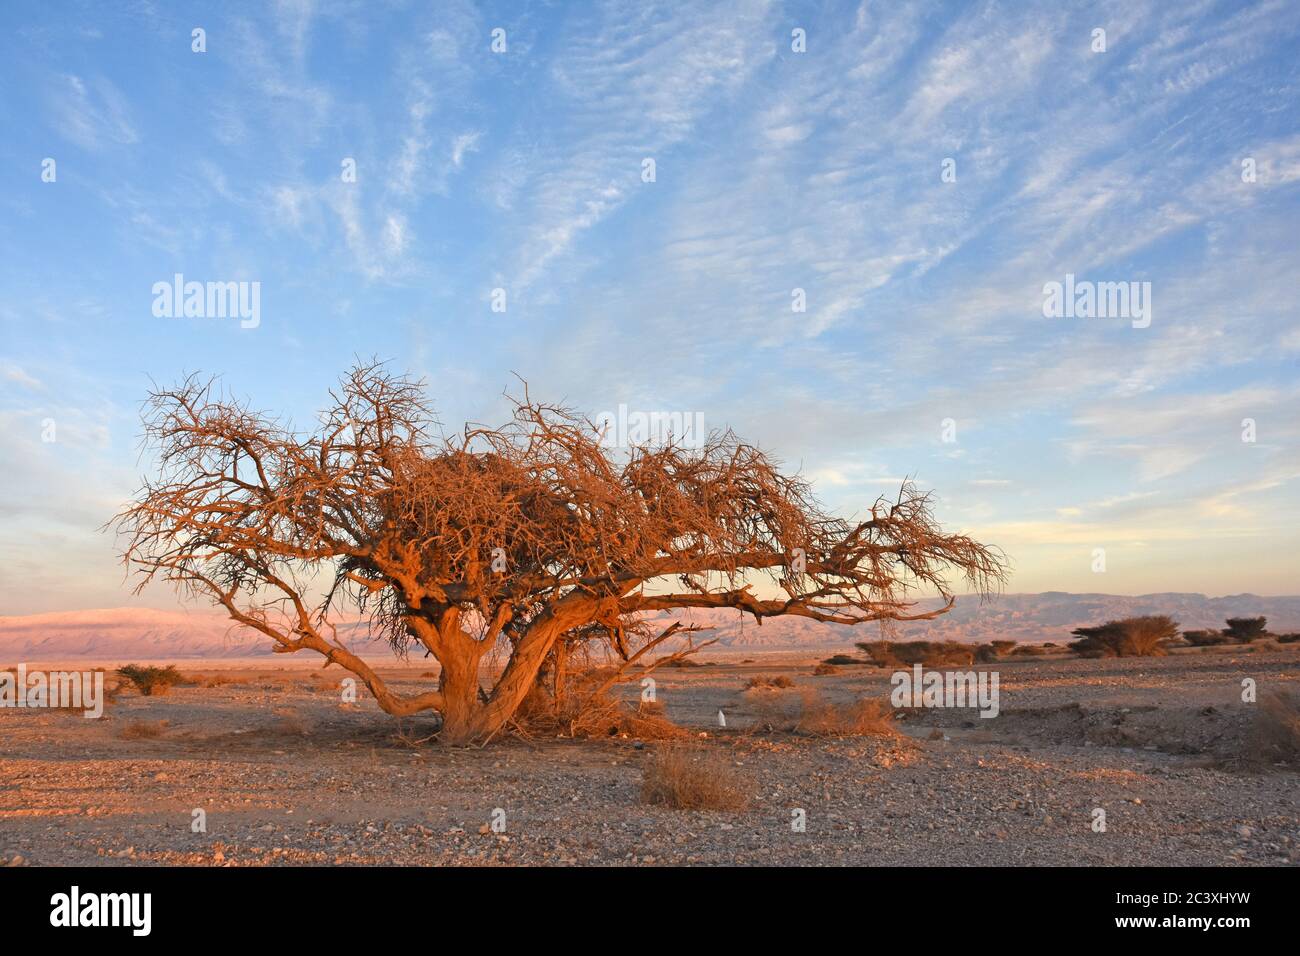 Acacia tree in the desert Stock Photo